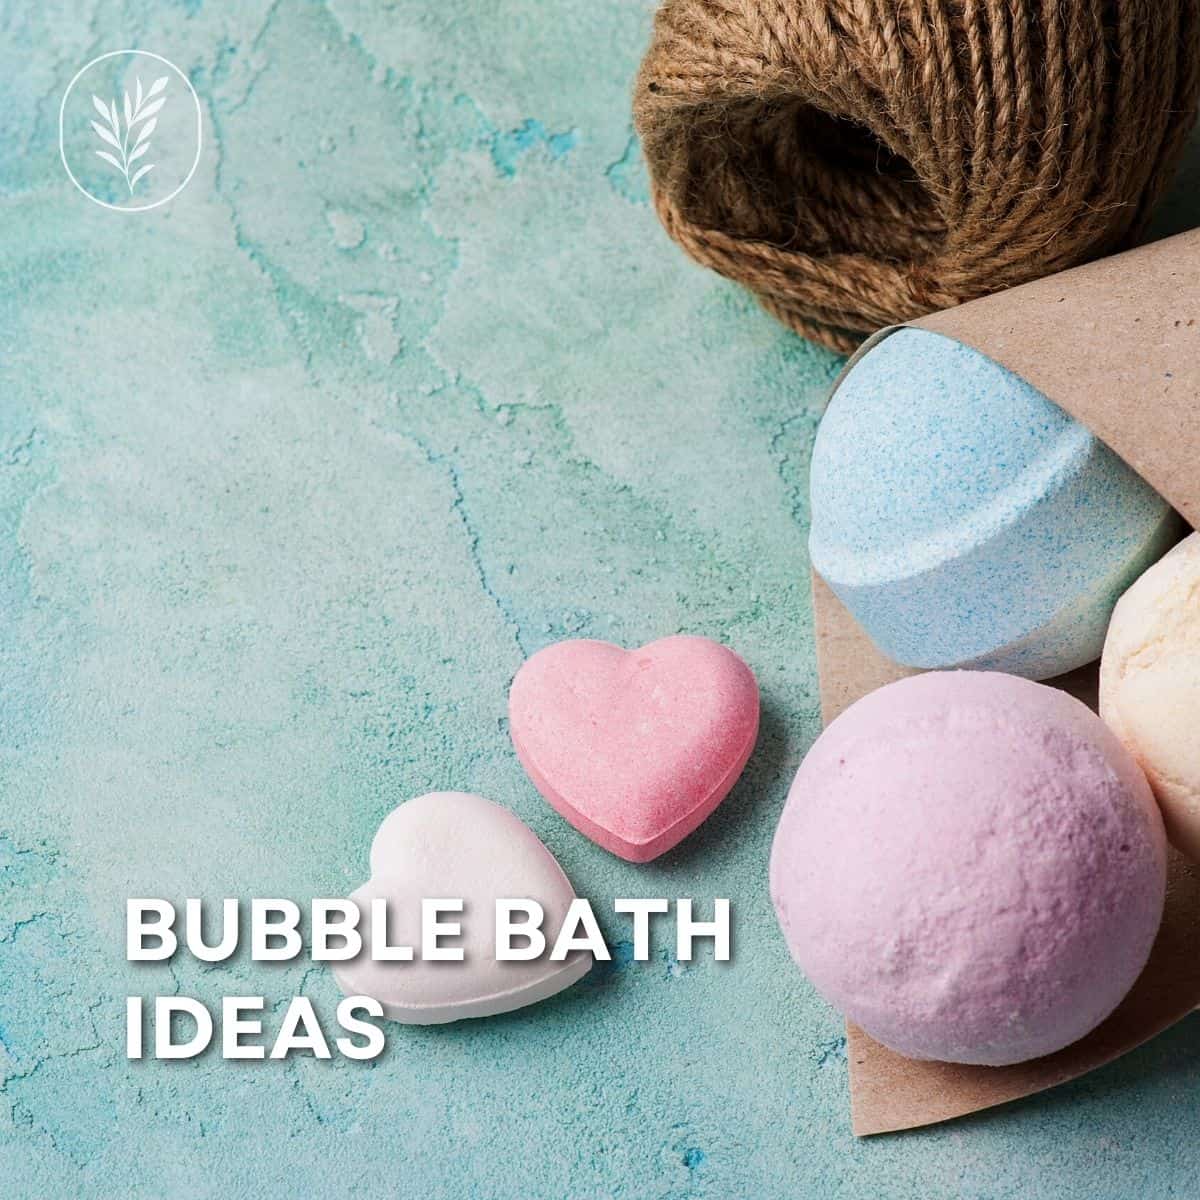 Bubble bath ideas via @home4theharvest